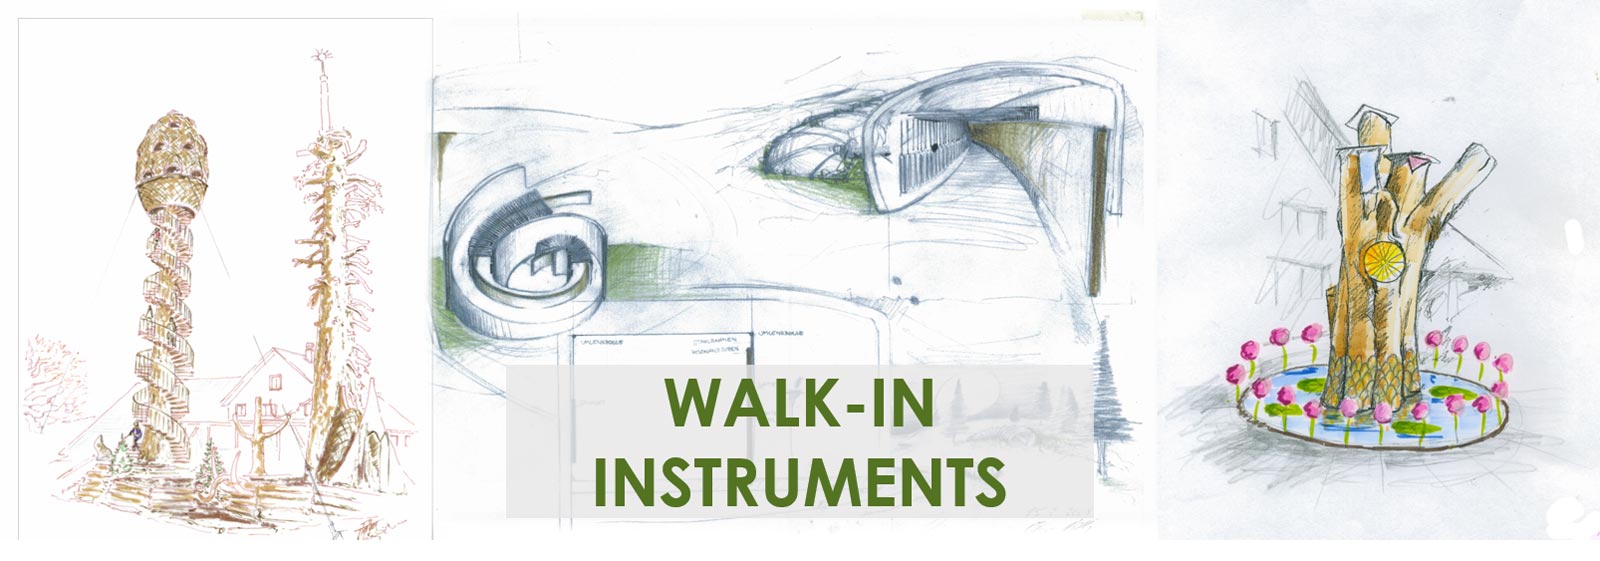 Treetalks Walk-in musical Instruments